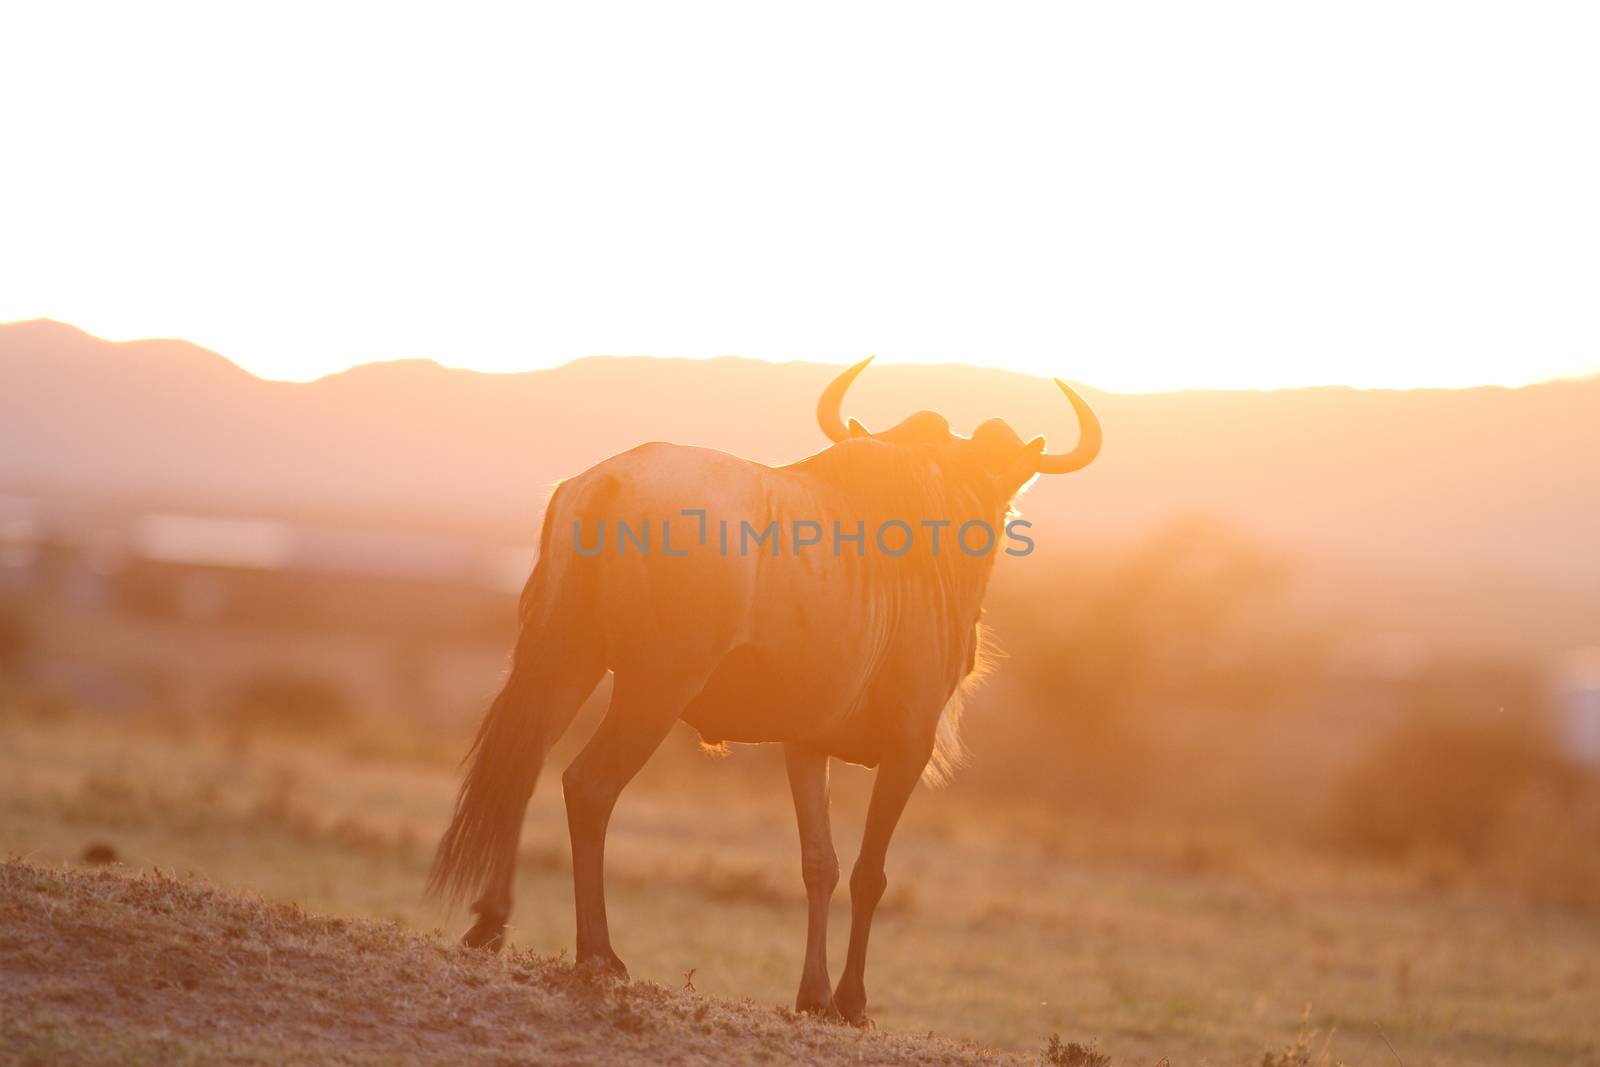 Wildebeest in the wilderness of Africa